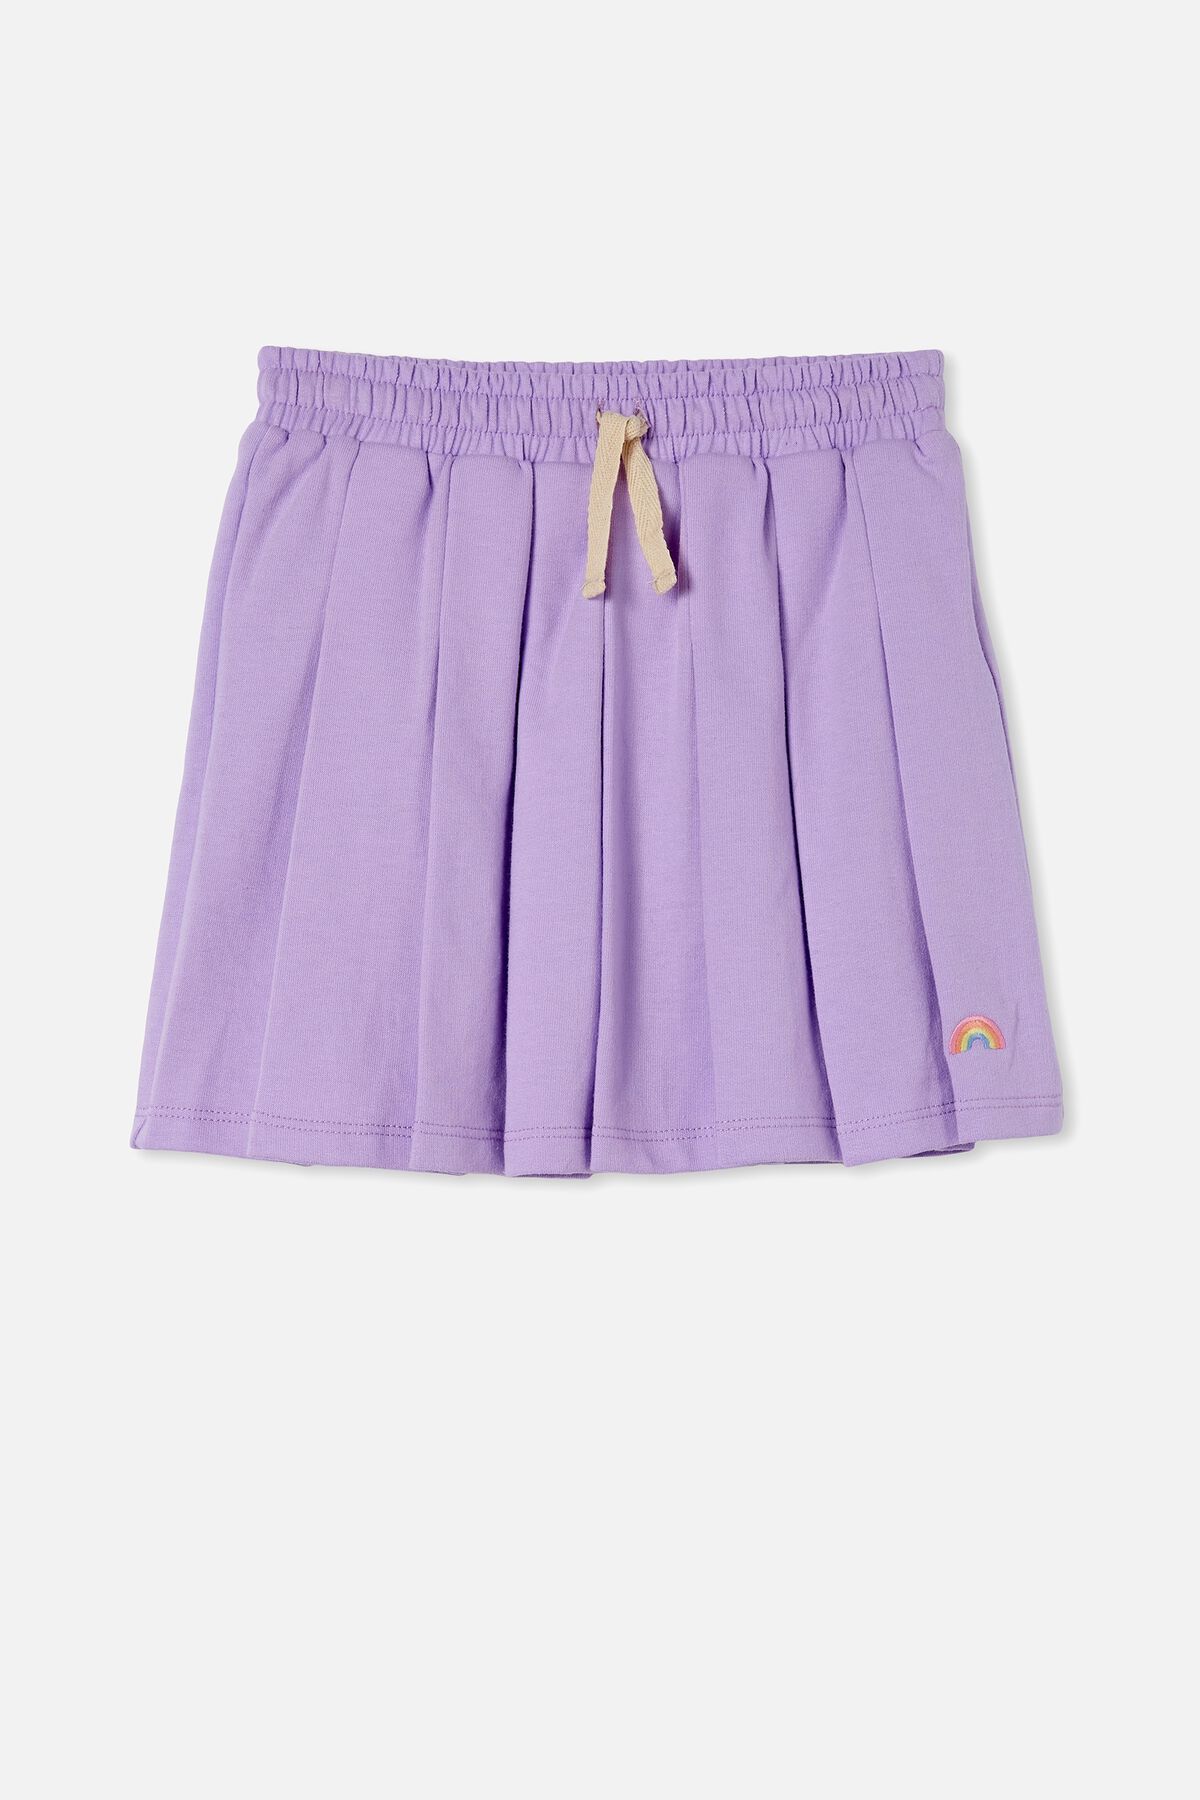 Heather Pleated Skirt | Cotton On (ANZ)